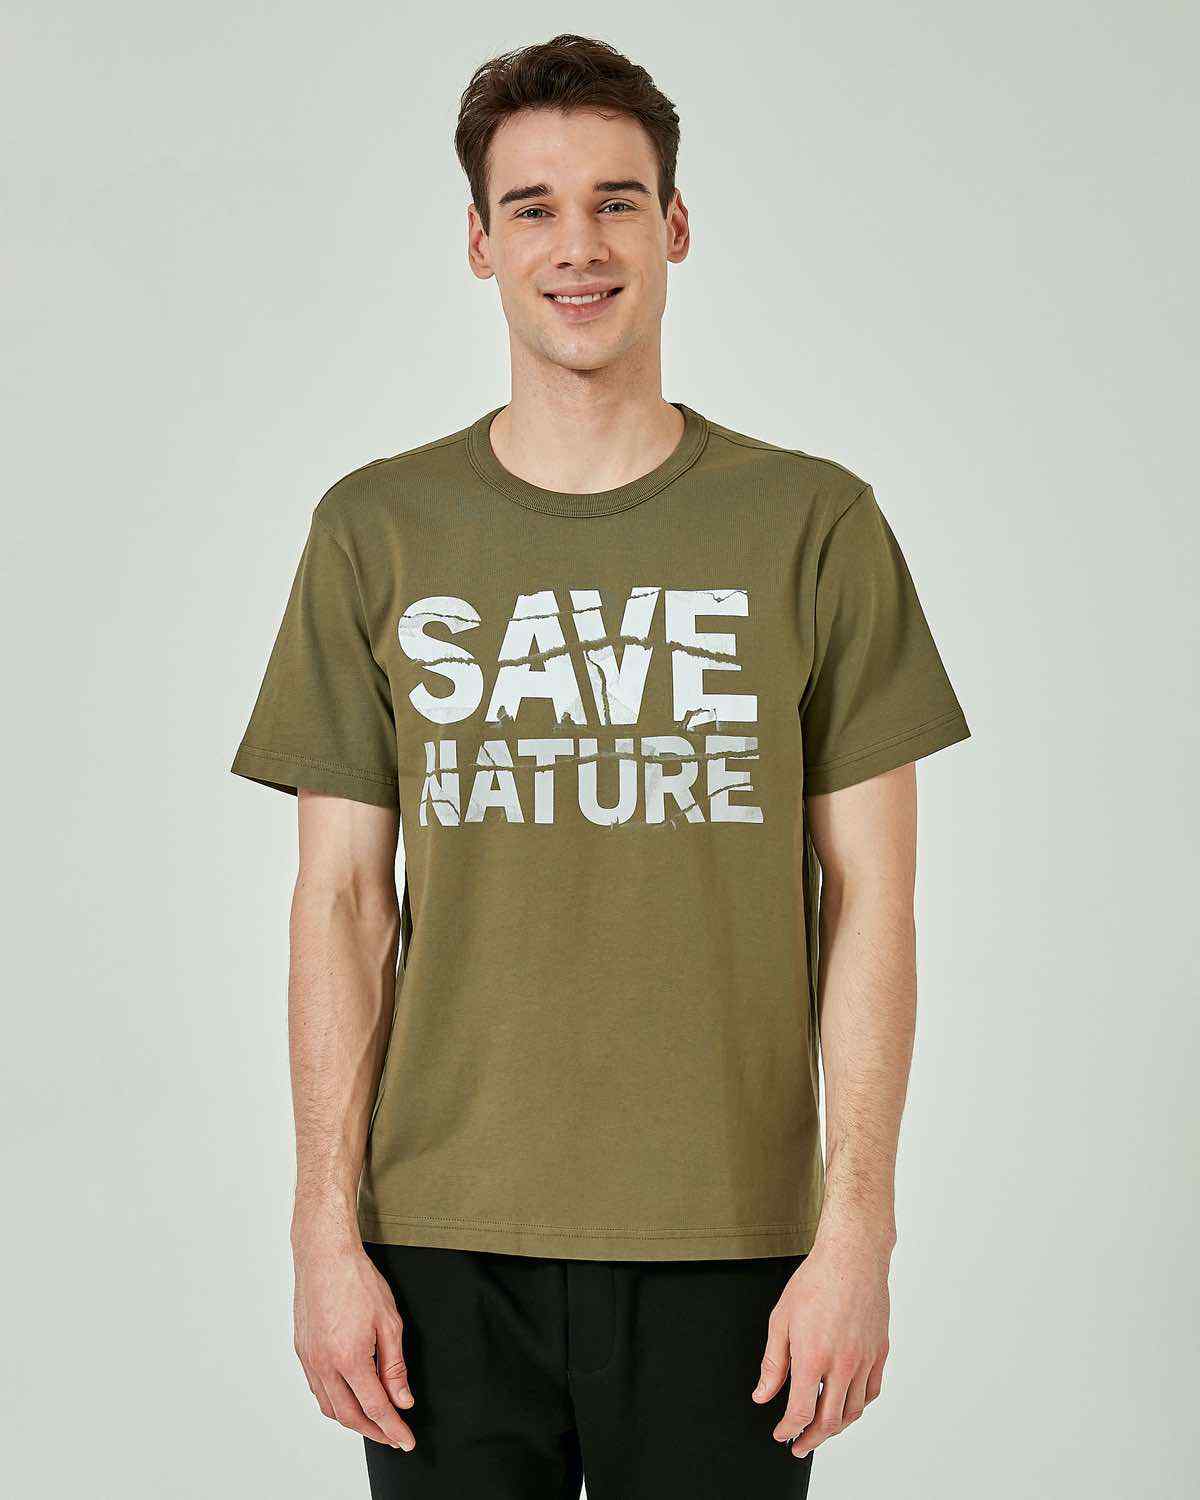 Benetton Message Tshirts. 1